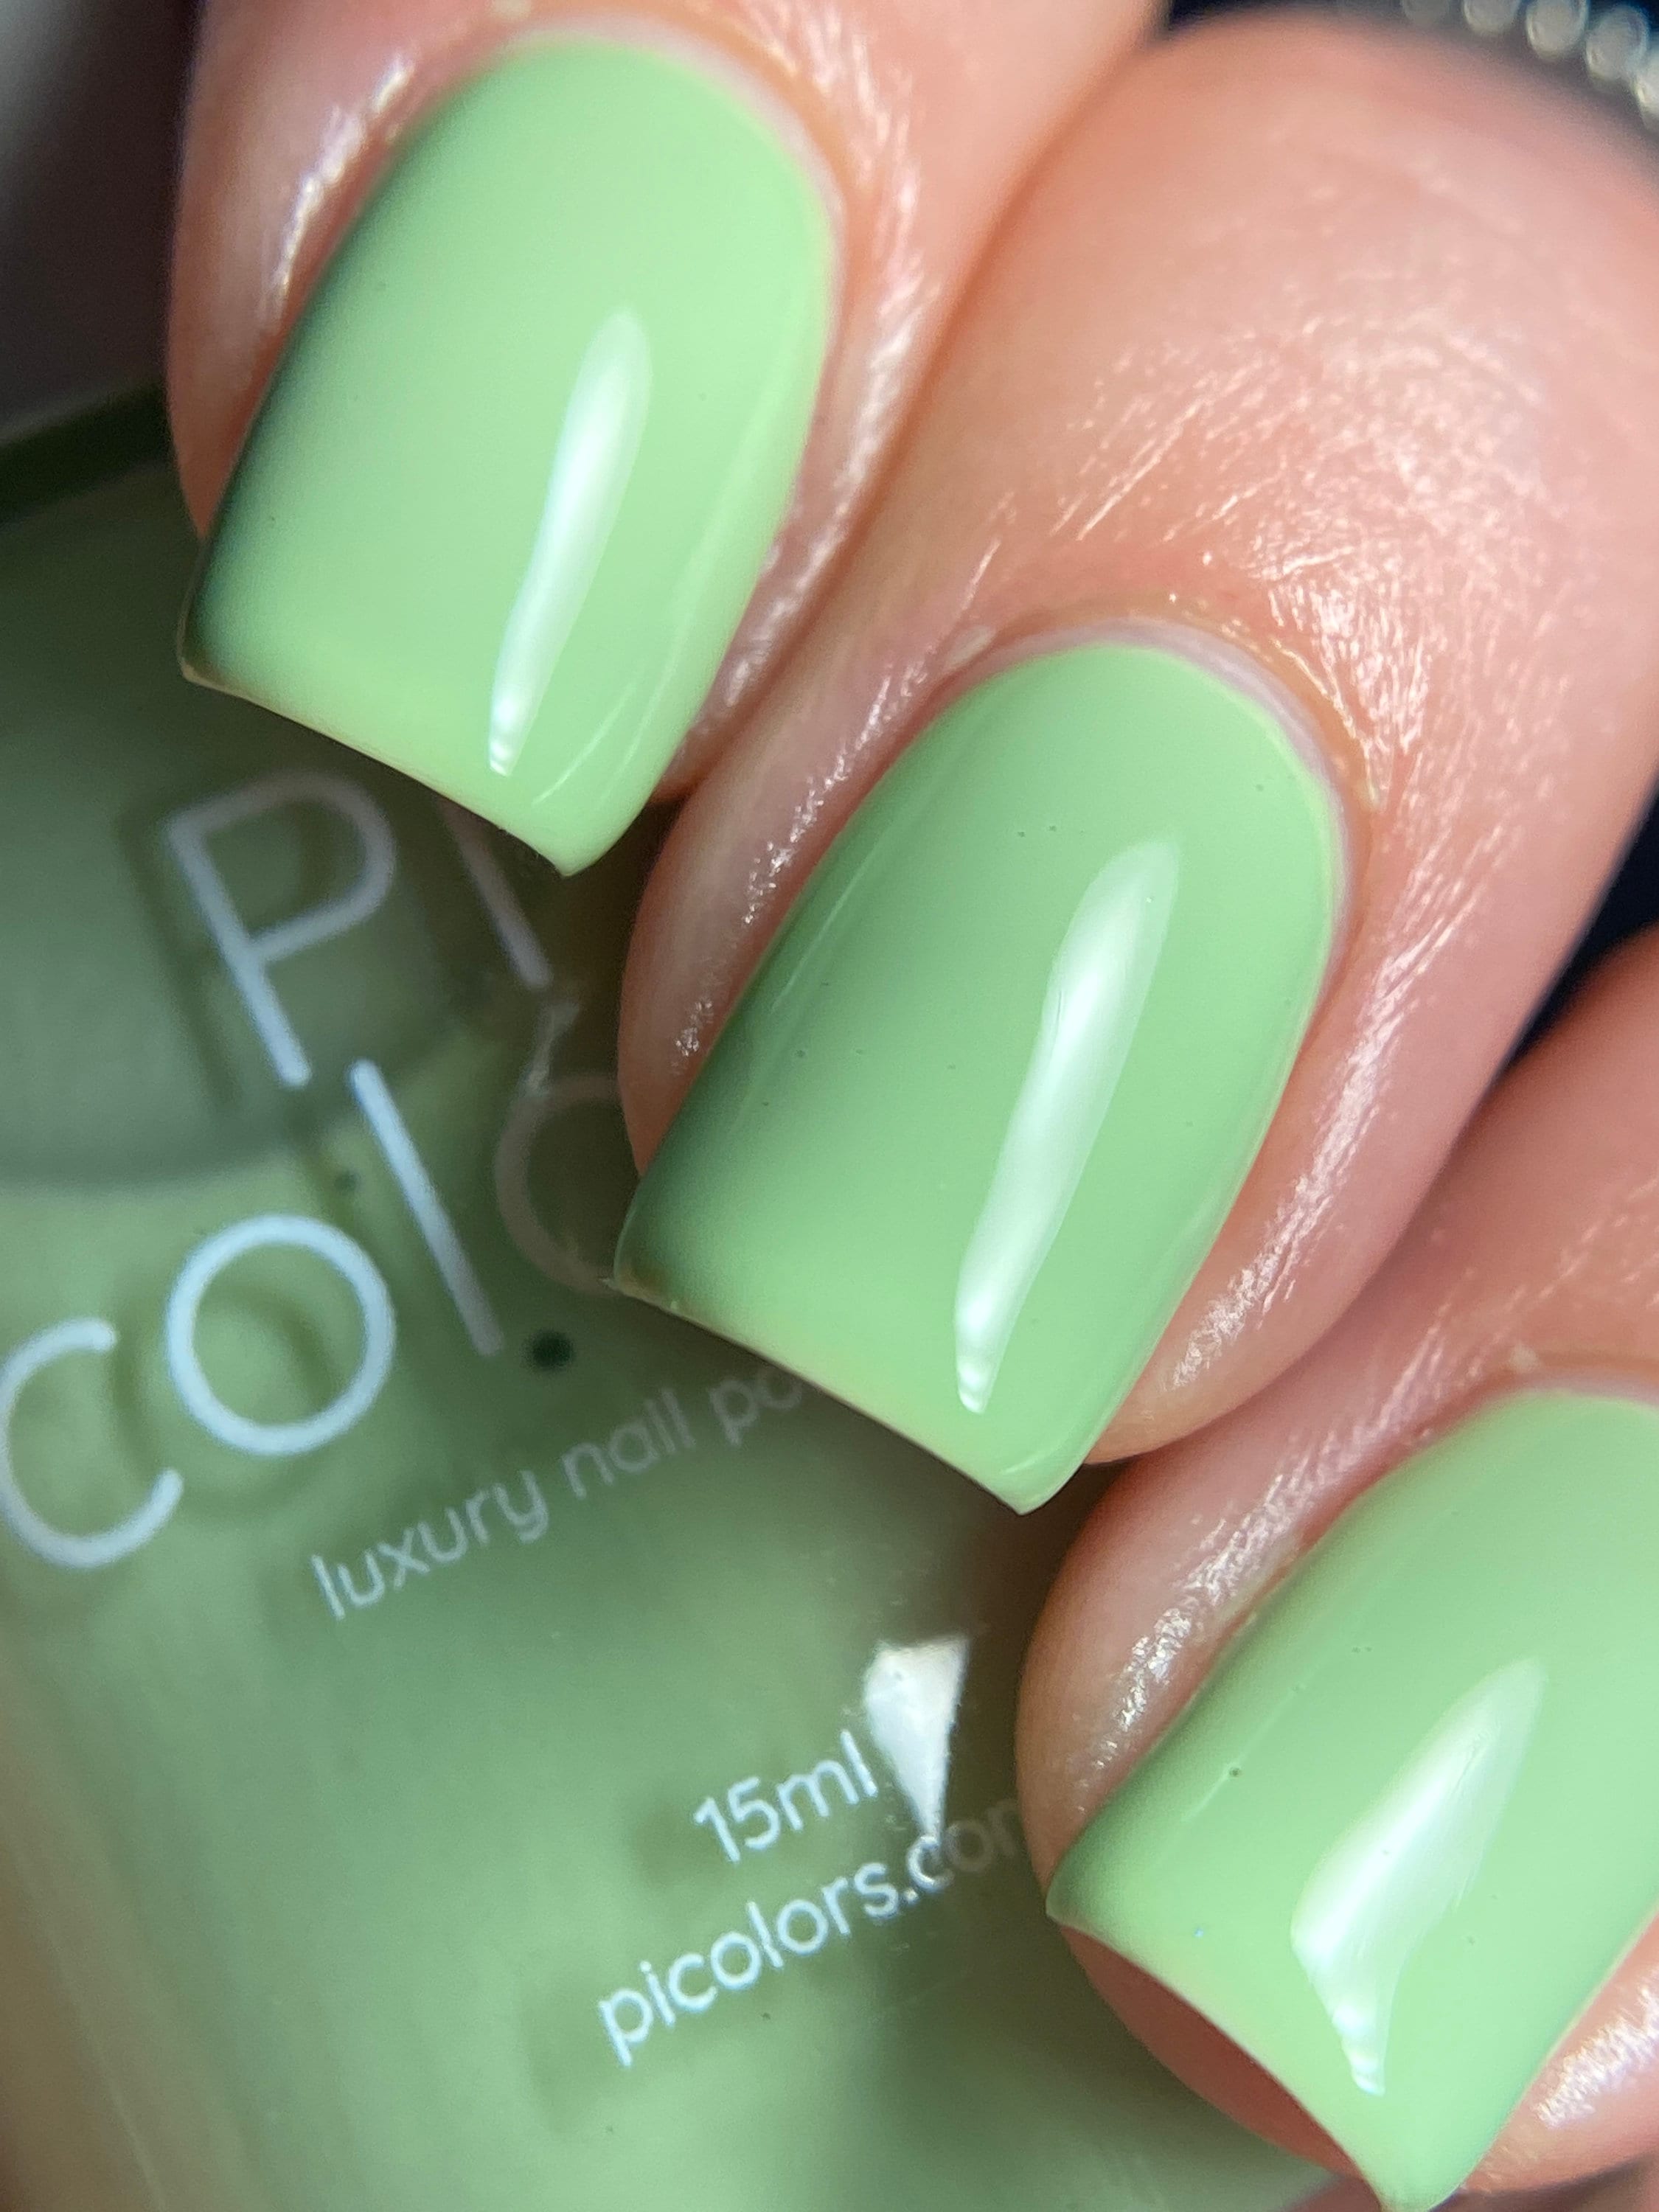 Pistachio - A dreamy soft pastel green in gloss